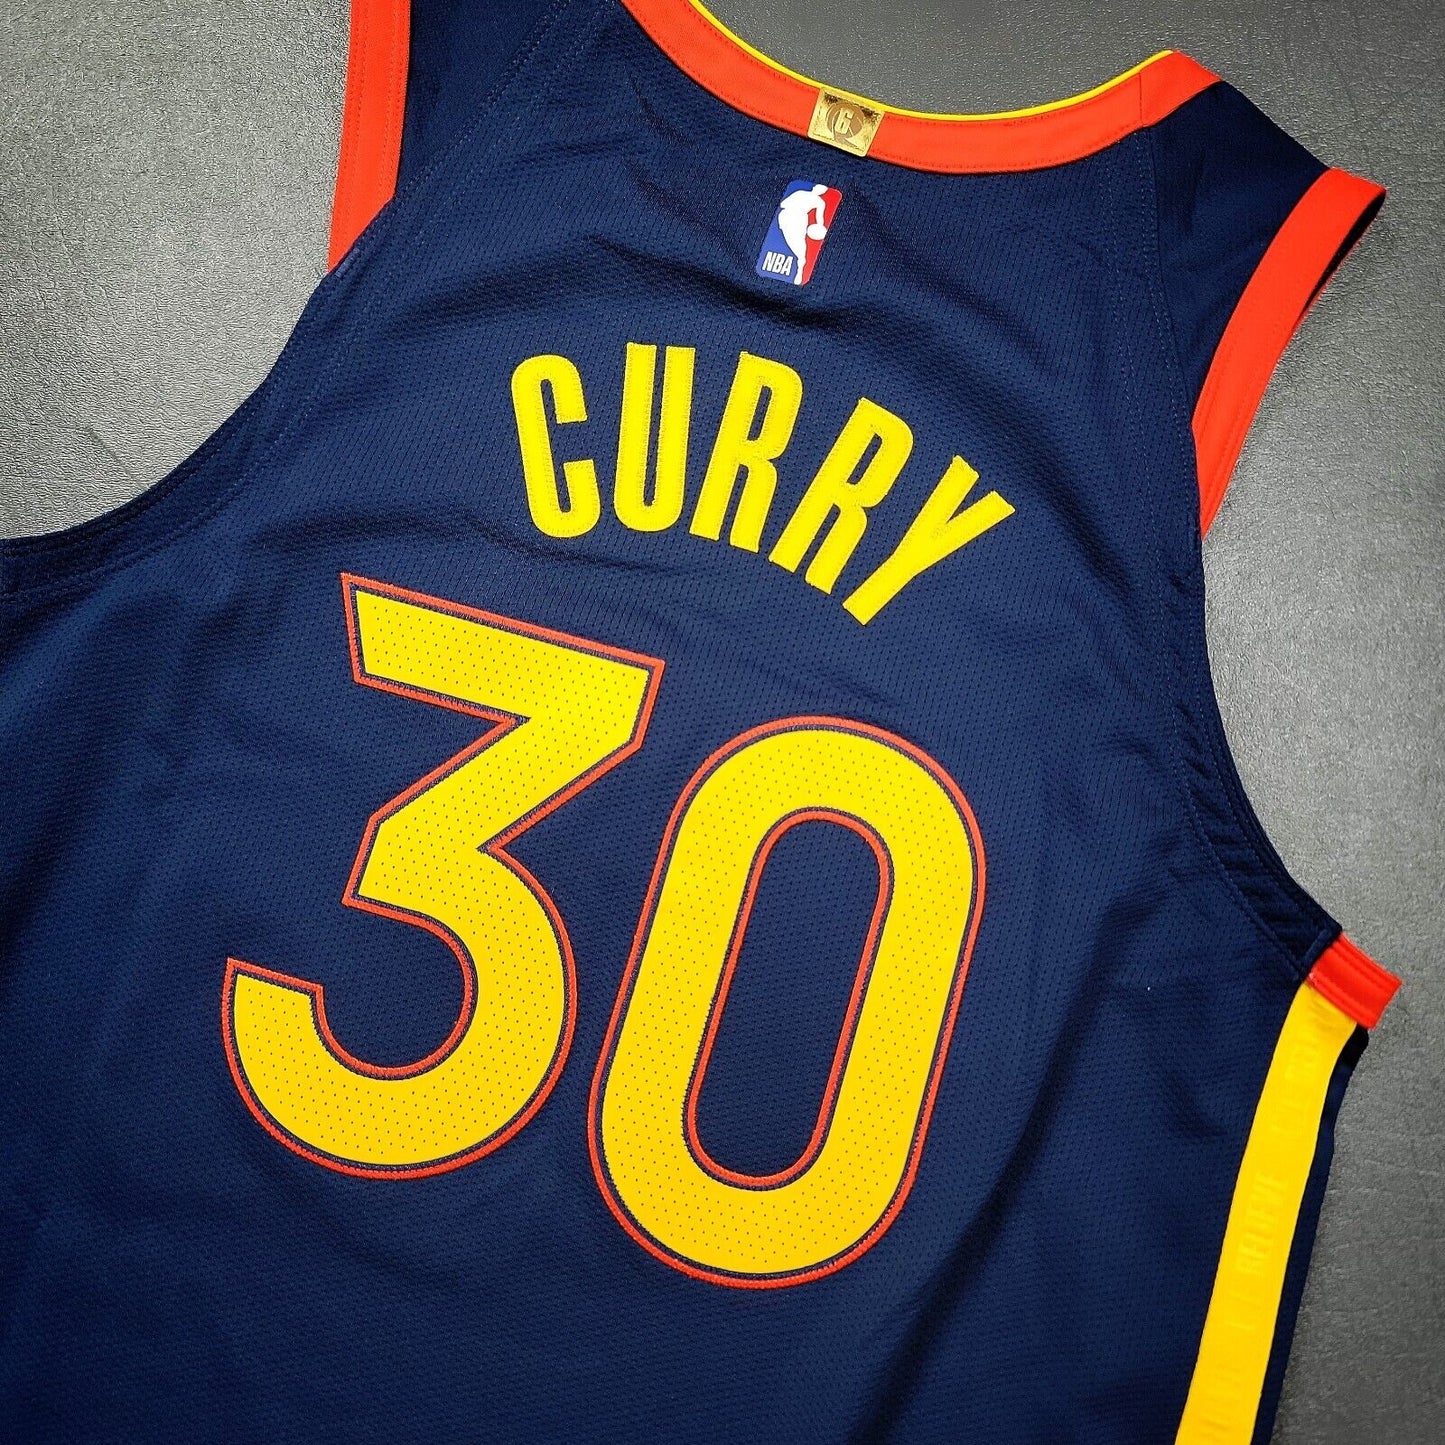 100% Authentic Stephen Curry Nike Warriors City Oakland Jersey Size 44 M Rakuten